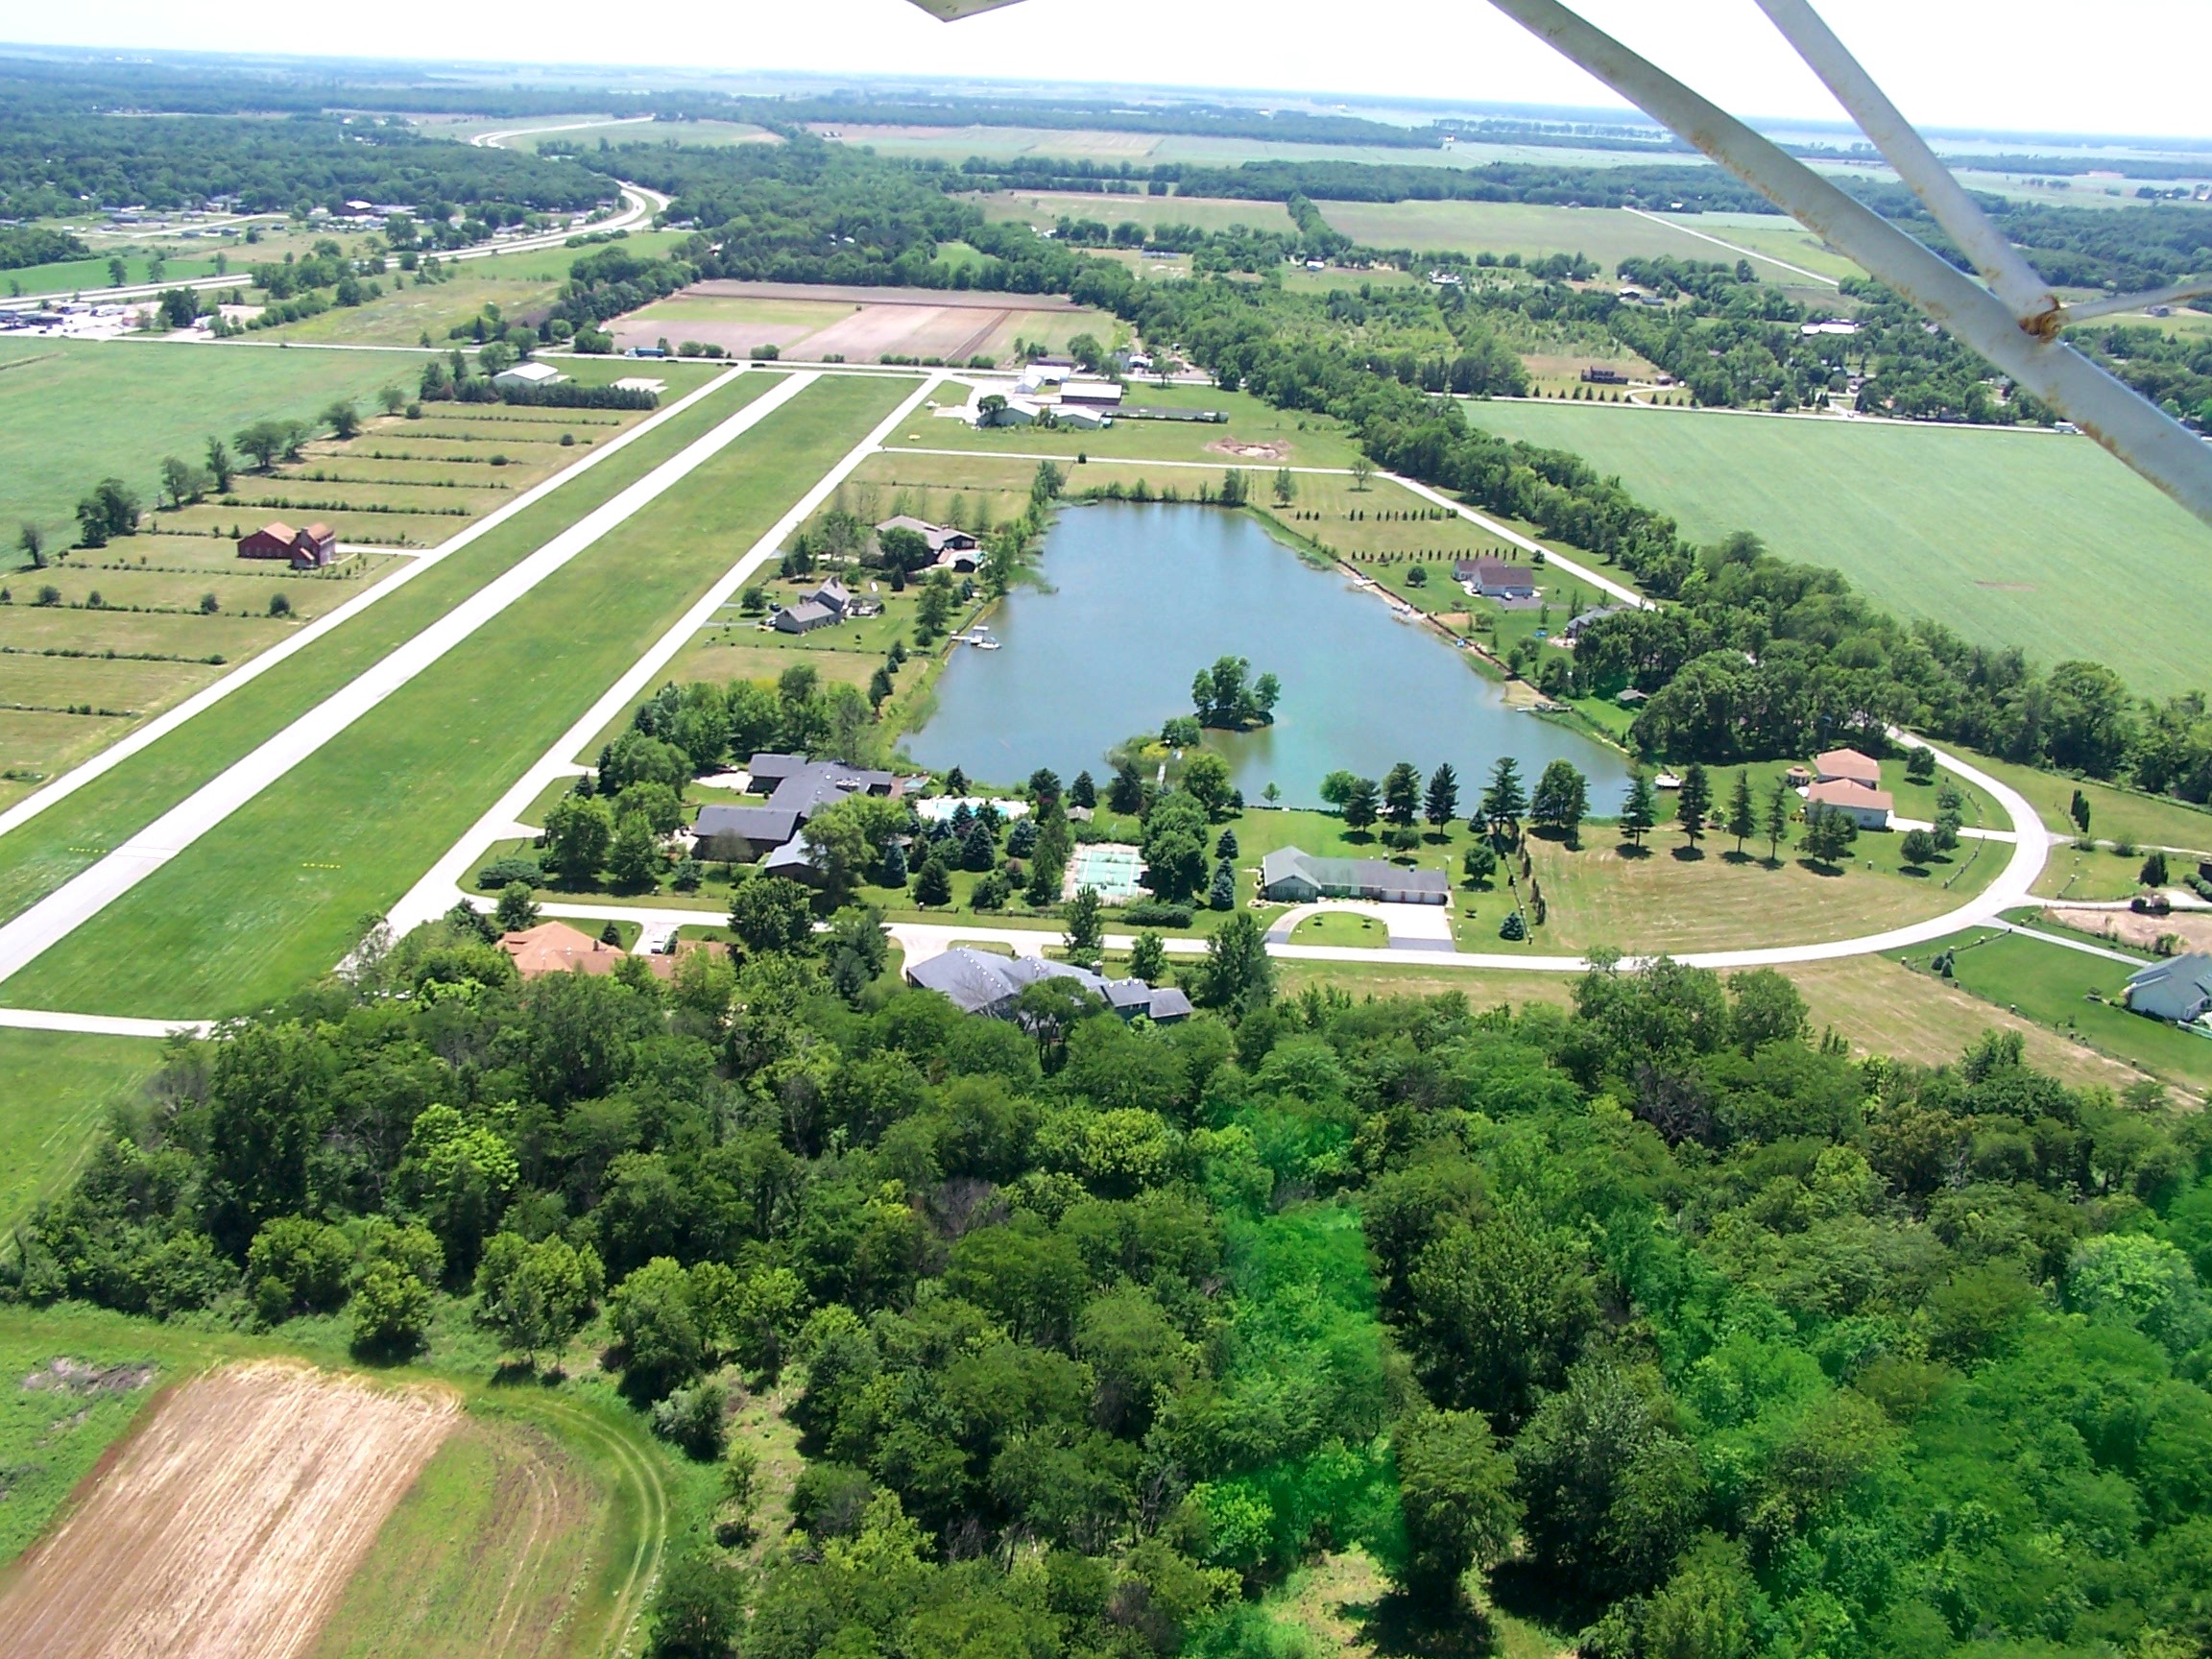 Lake Village Airport and Lake Aero Estates looking south